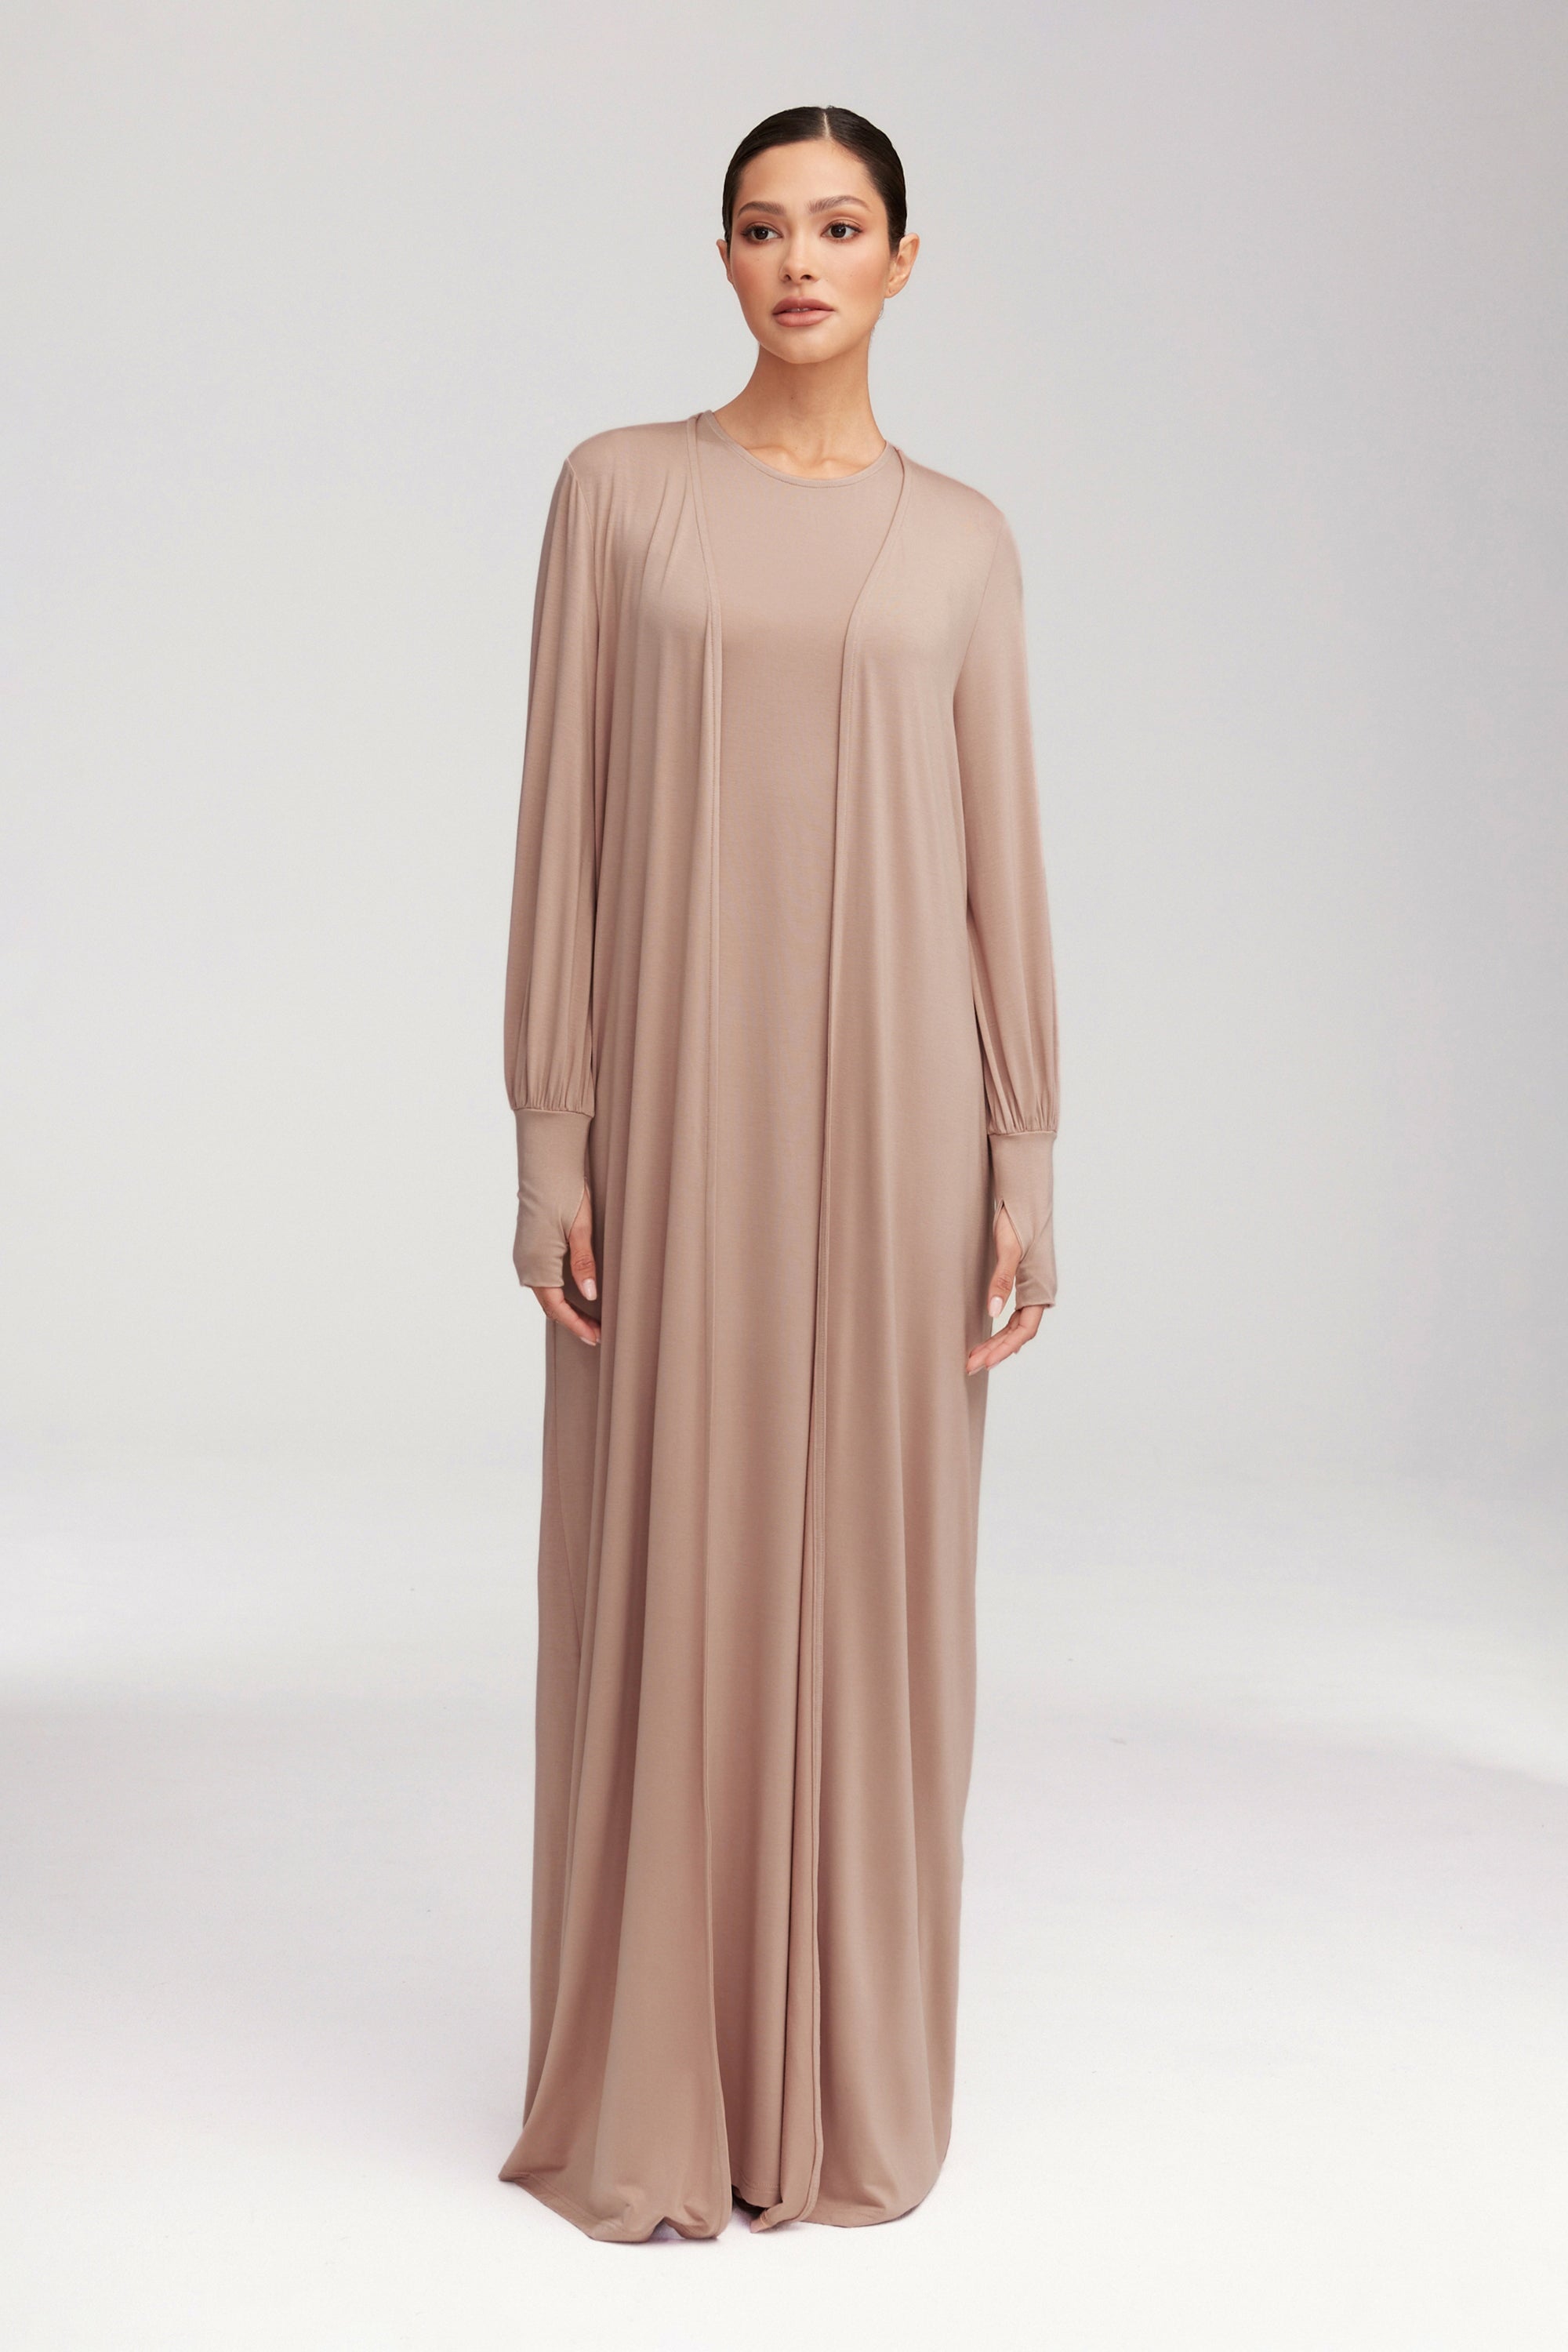 Jenin Jersey Open Abaya - Mink Clothing Veiled 